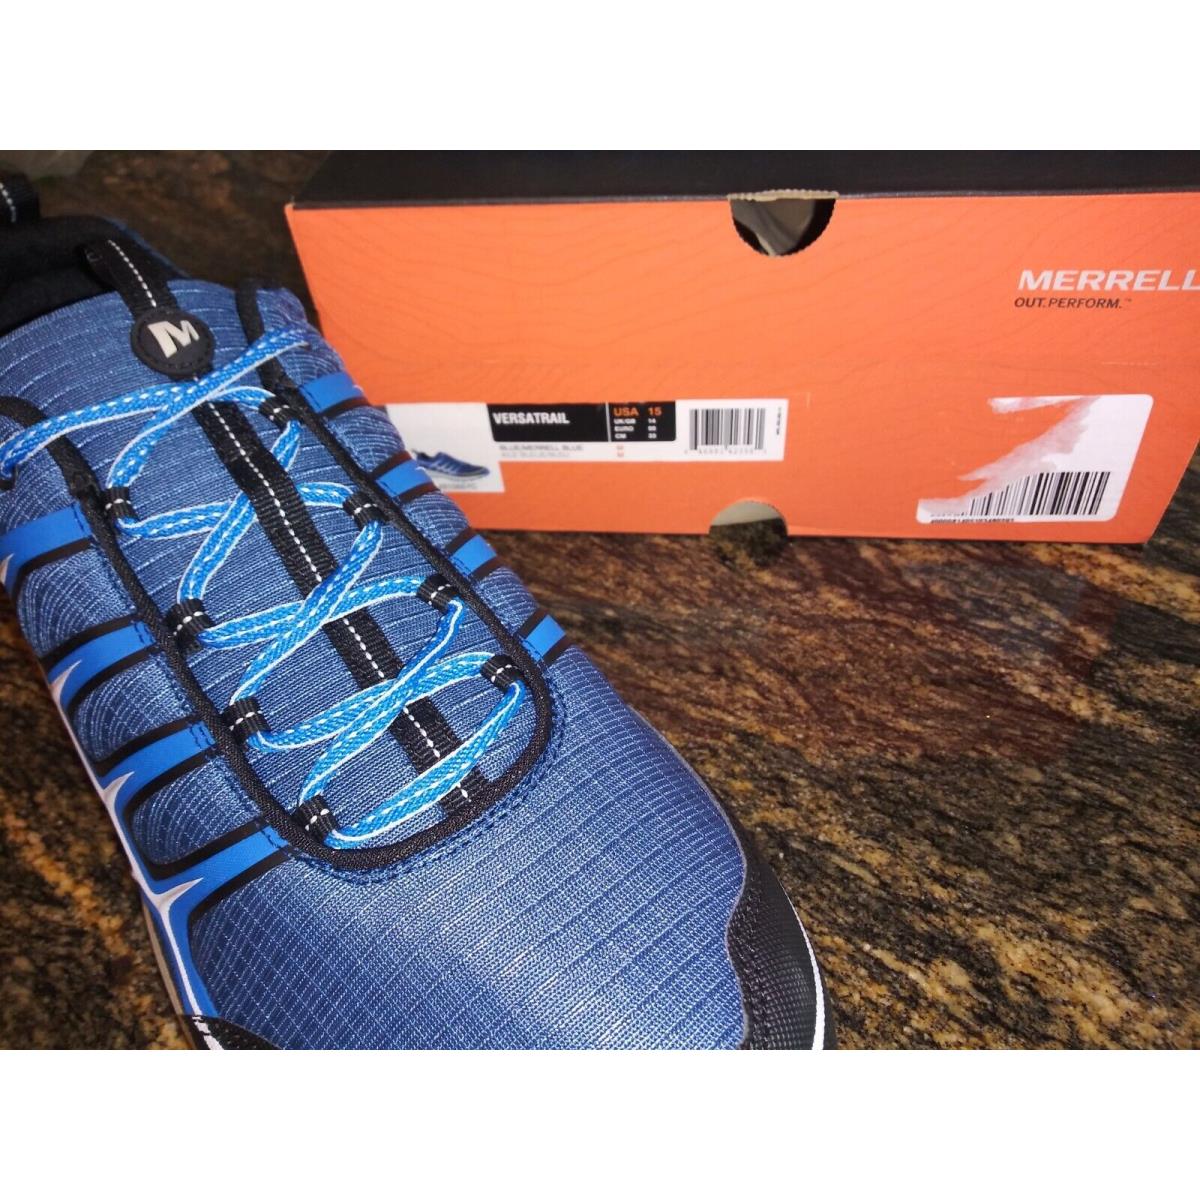 Merrell shoes  - Blue /Merrell Blue 0